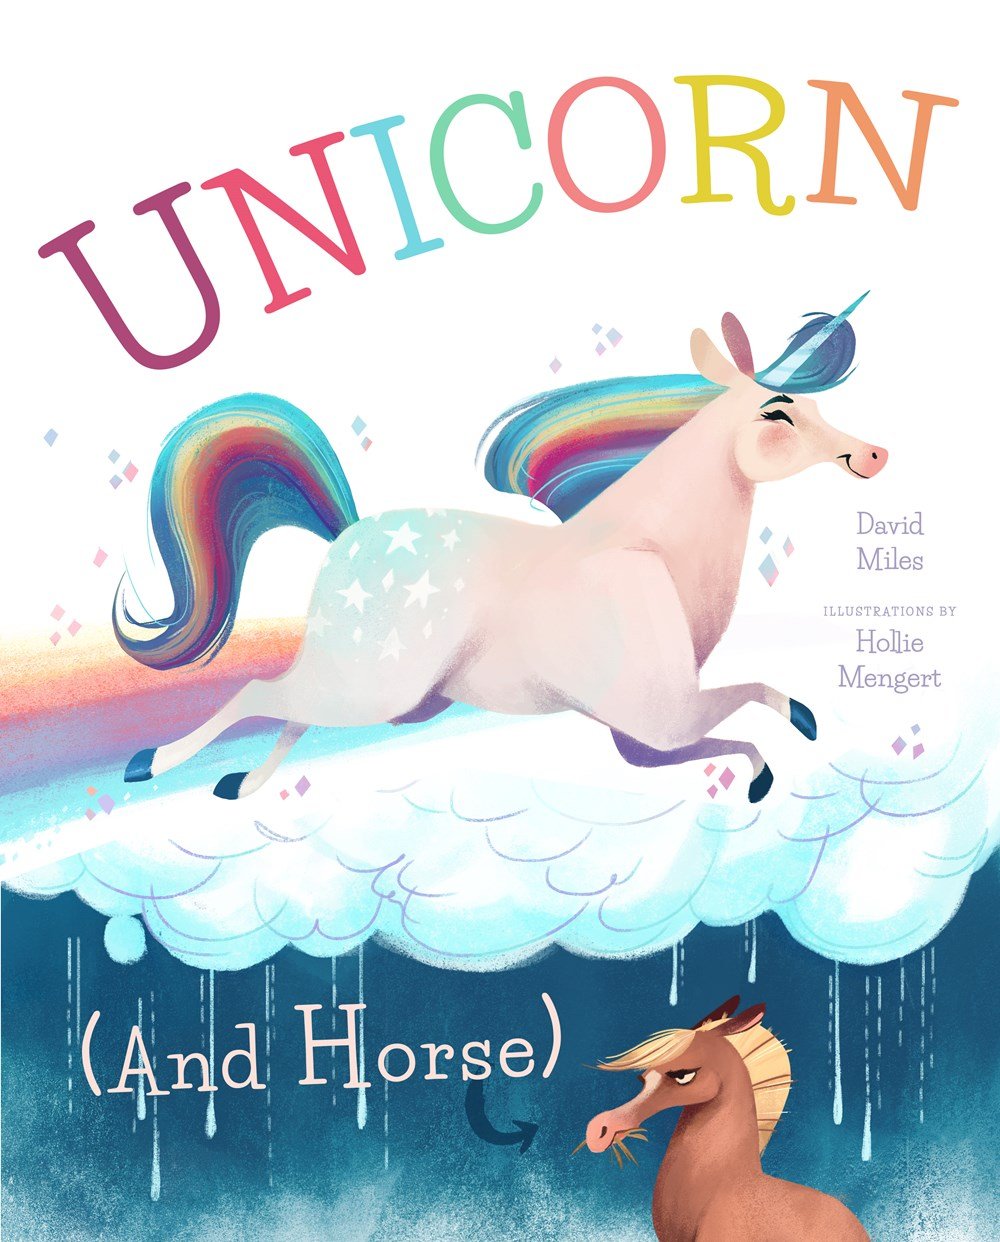 Unicorn (and Horse) Book